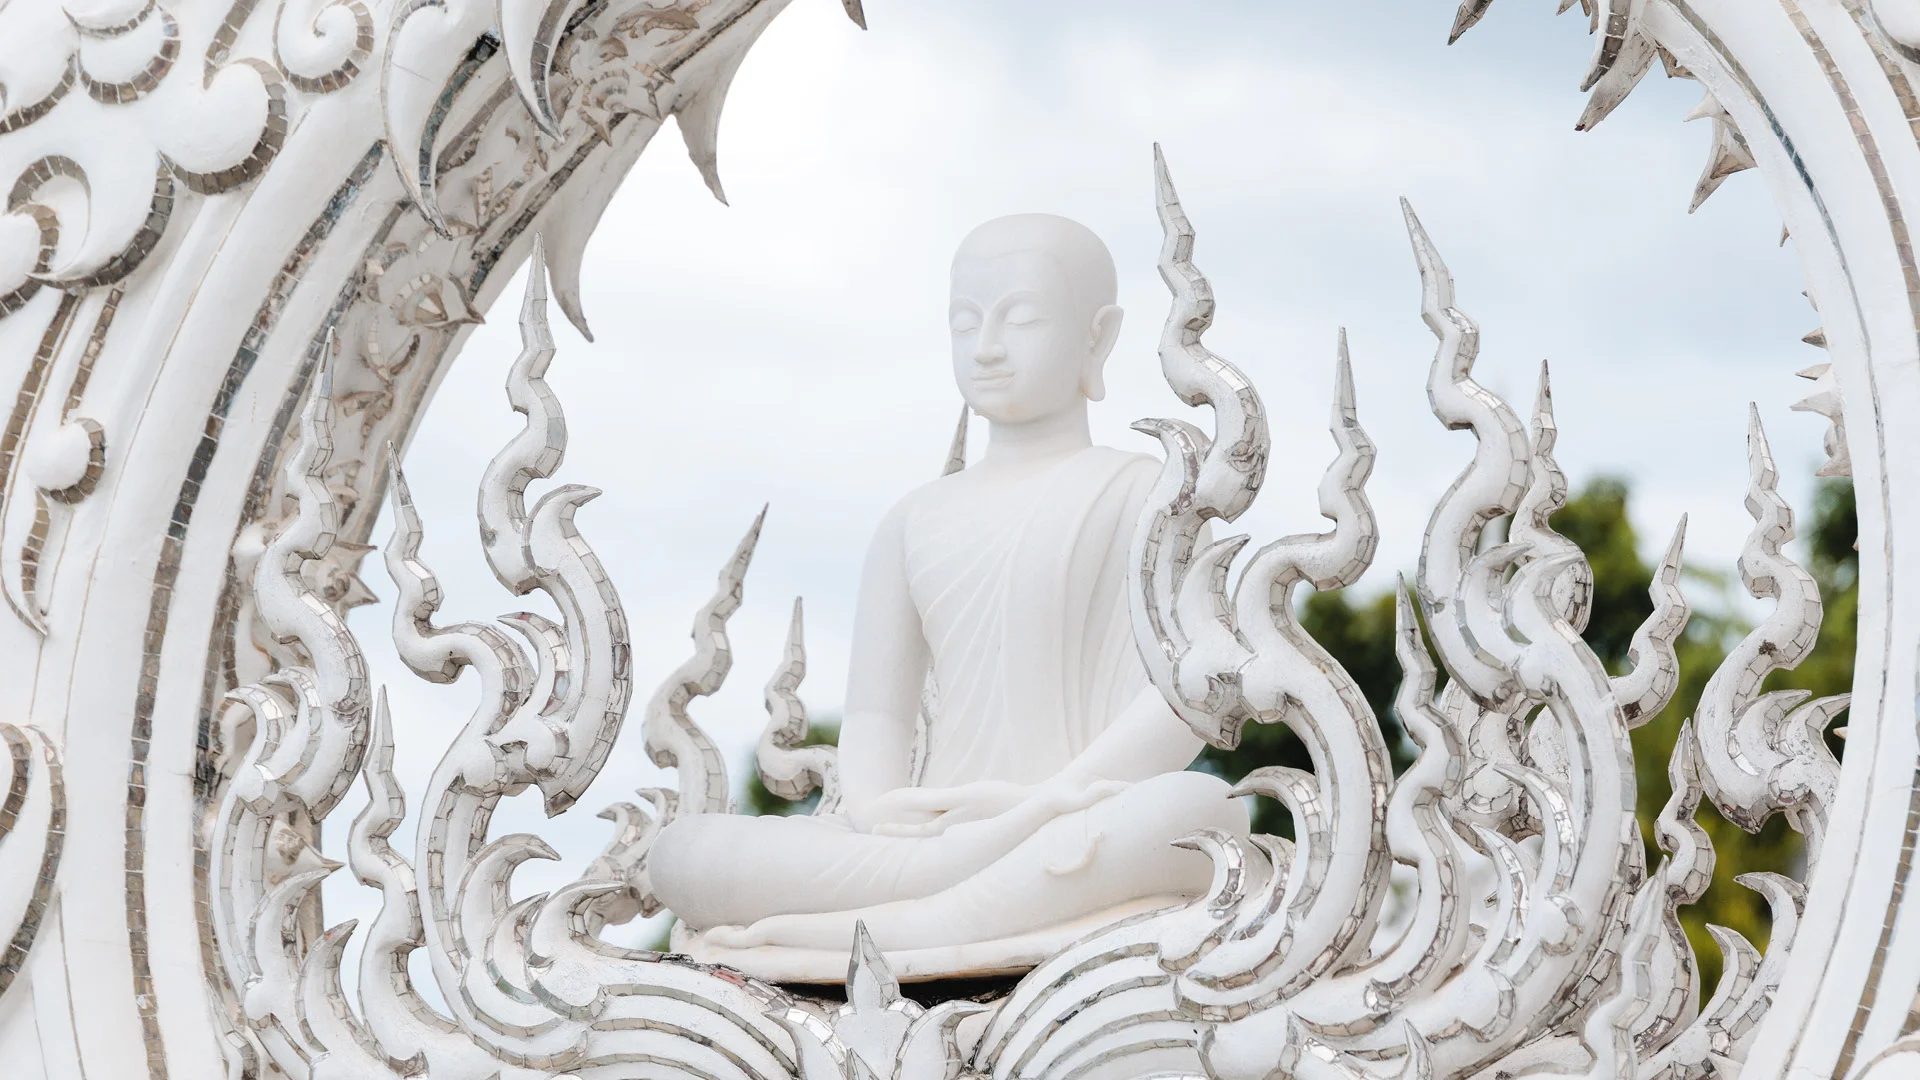 Buddha statue in Wat Rong Khun - White Temple, Chiang Rai, Thailand